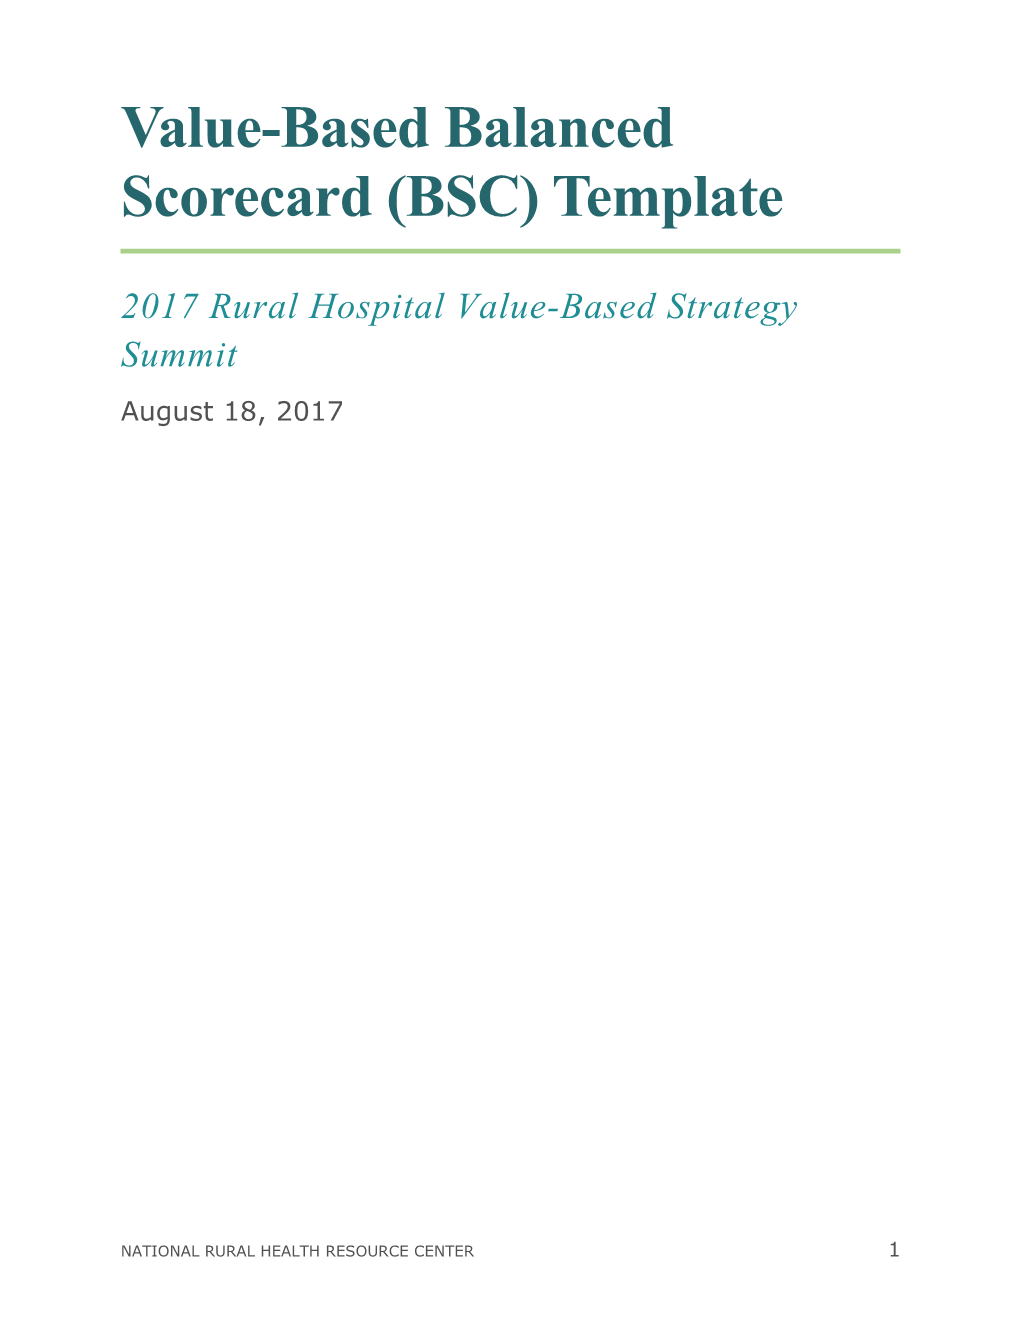 Value-Based Balanced Scorecard (BSC) Template